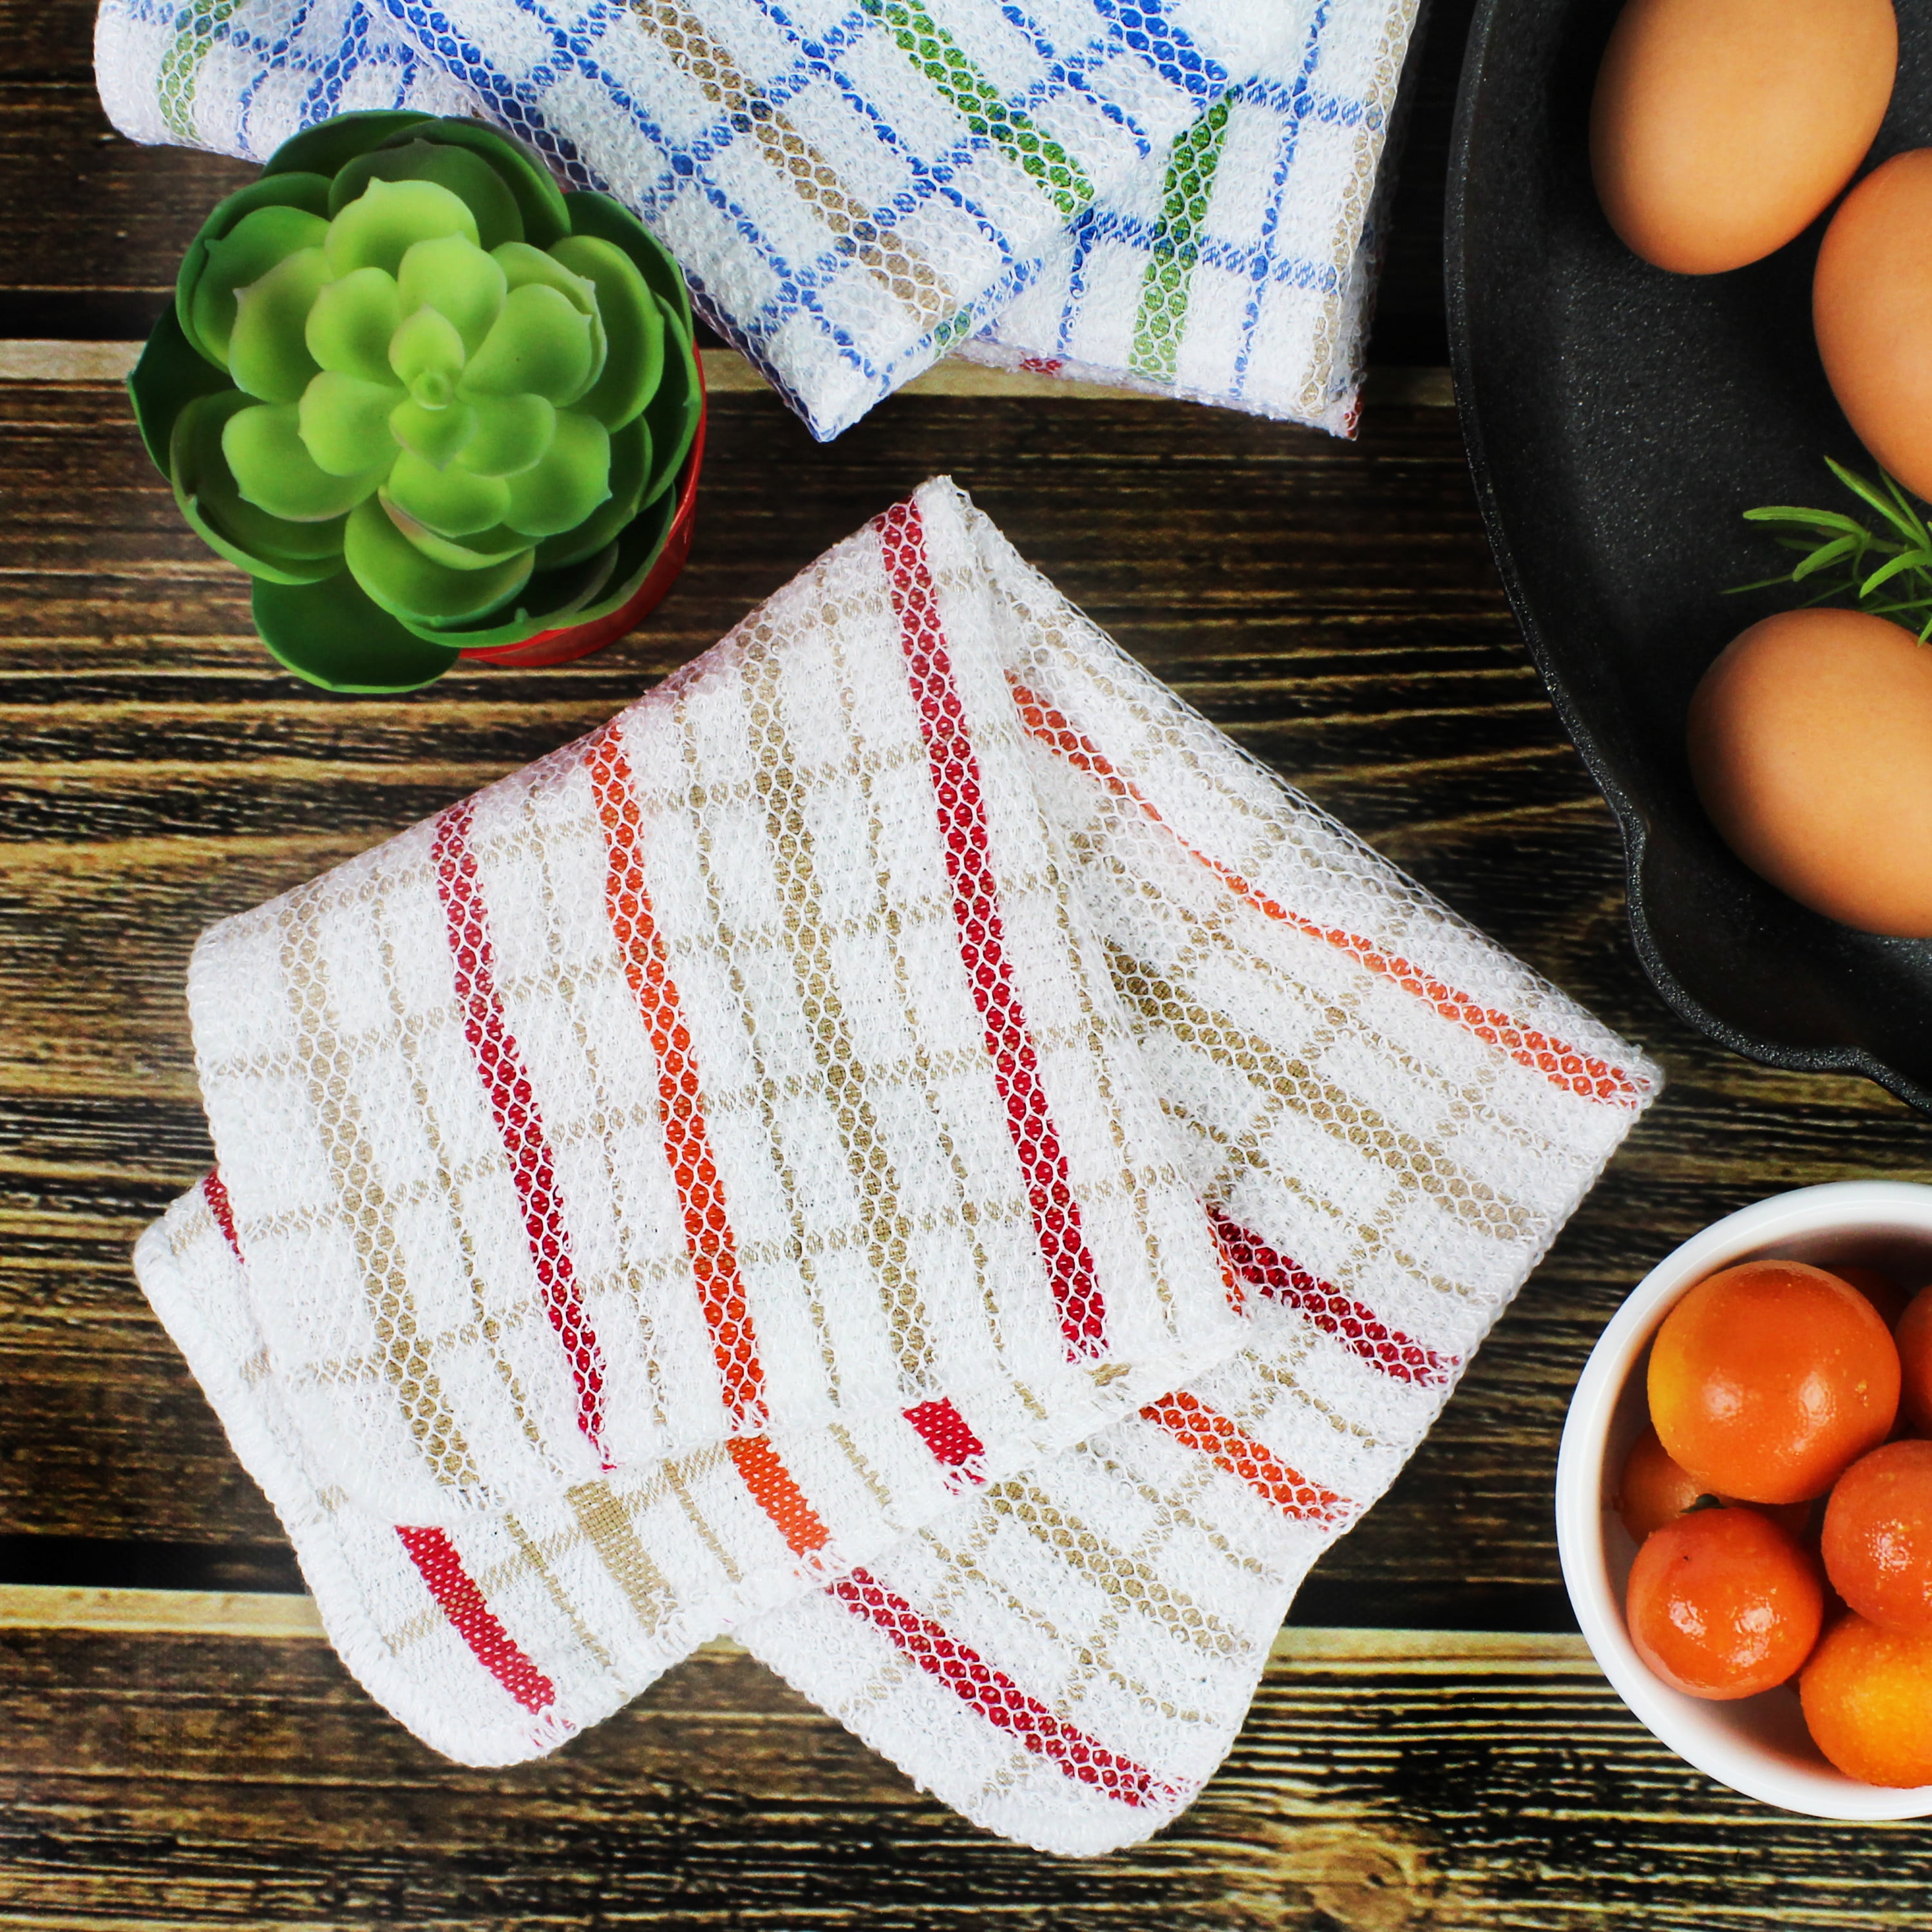 DALX 20 PCSKitchen Dish Cloths for Washing Dishes Odor Free, Home Dishcloth  Towels Sets Microfiber Soft 